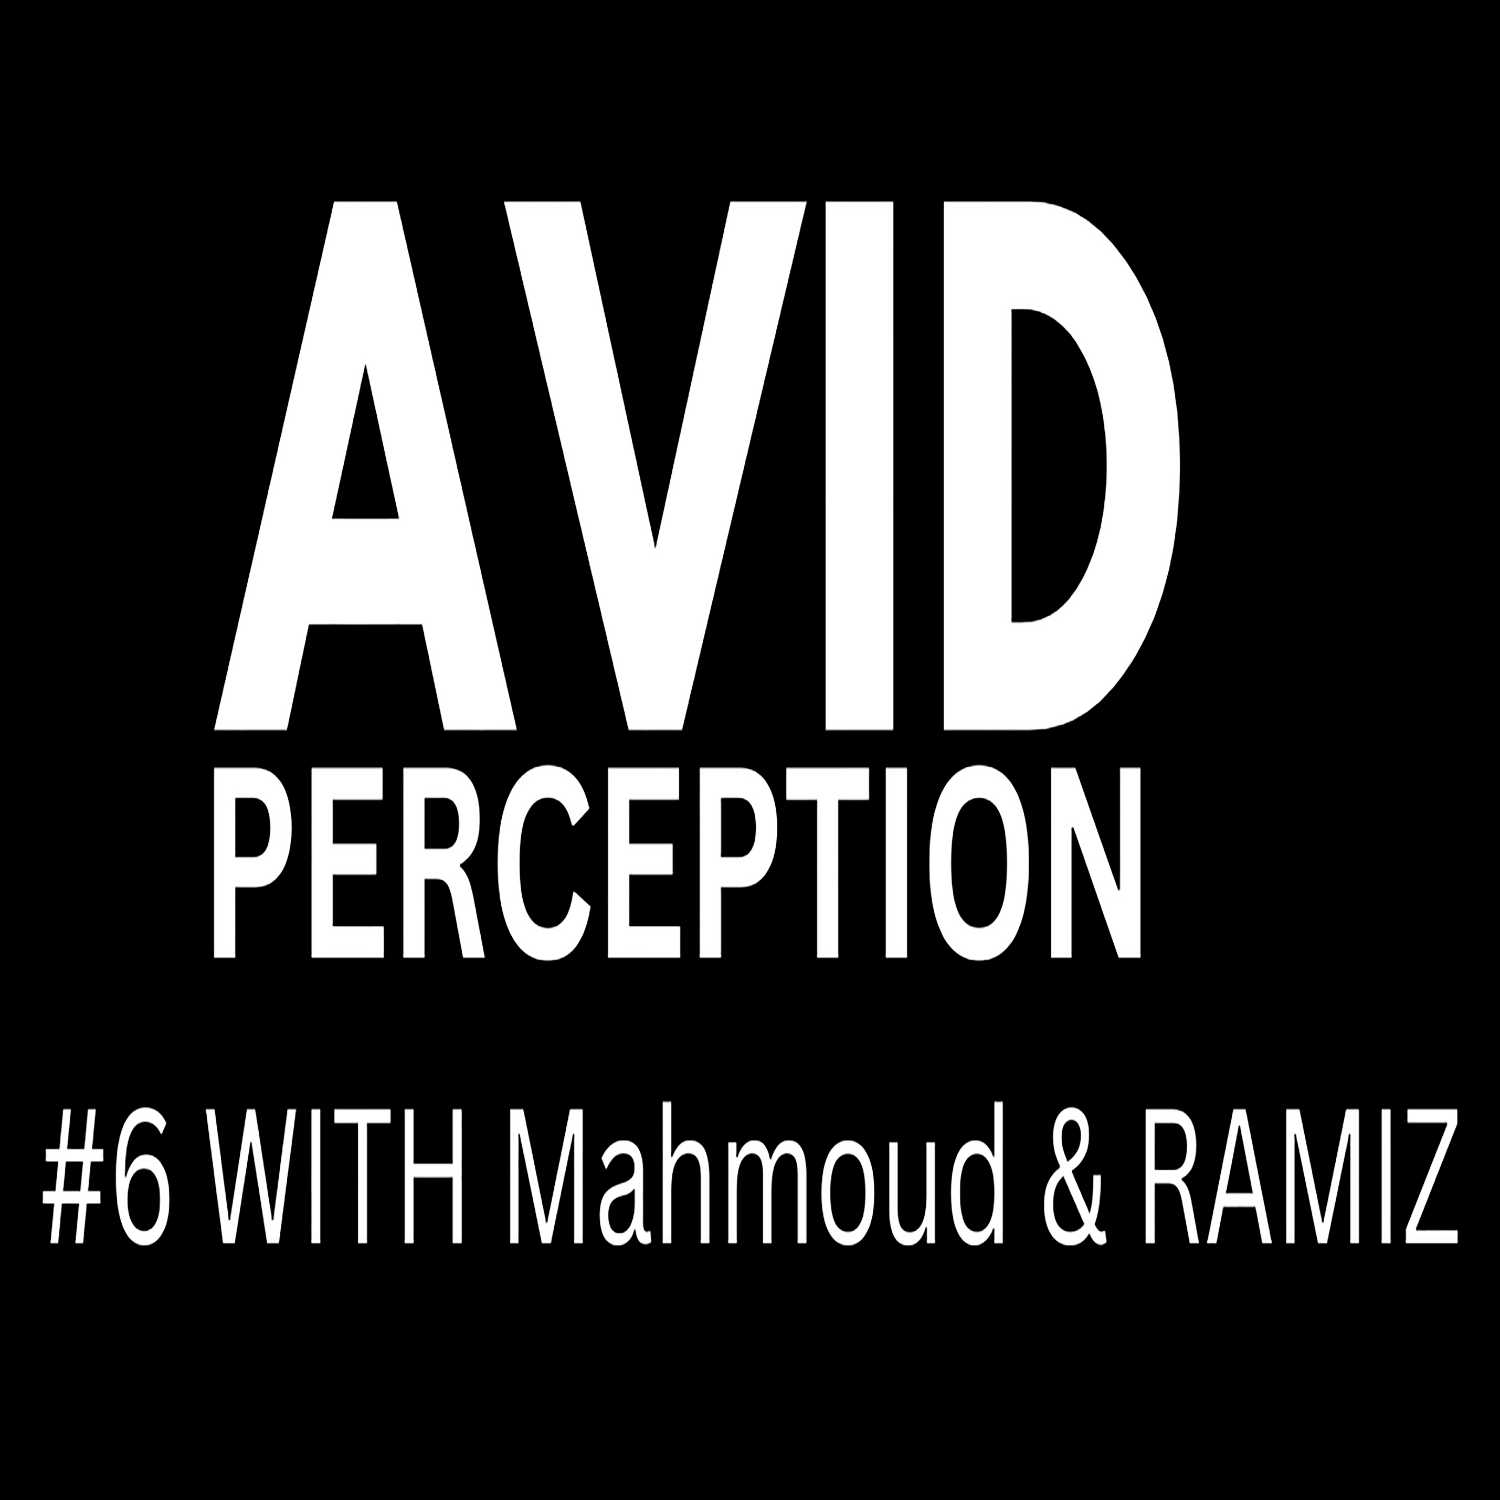 #6 - AVID PERCEPTION WITH Mahmoud & RAMIZ